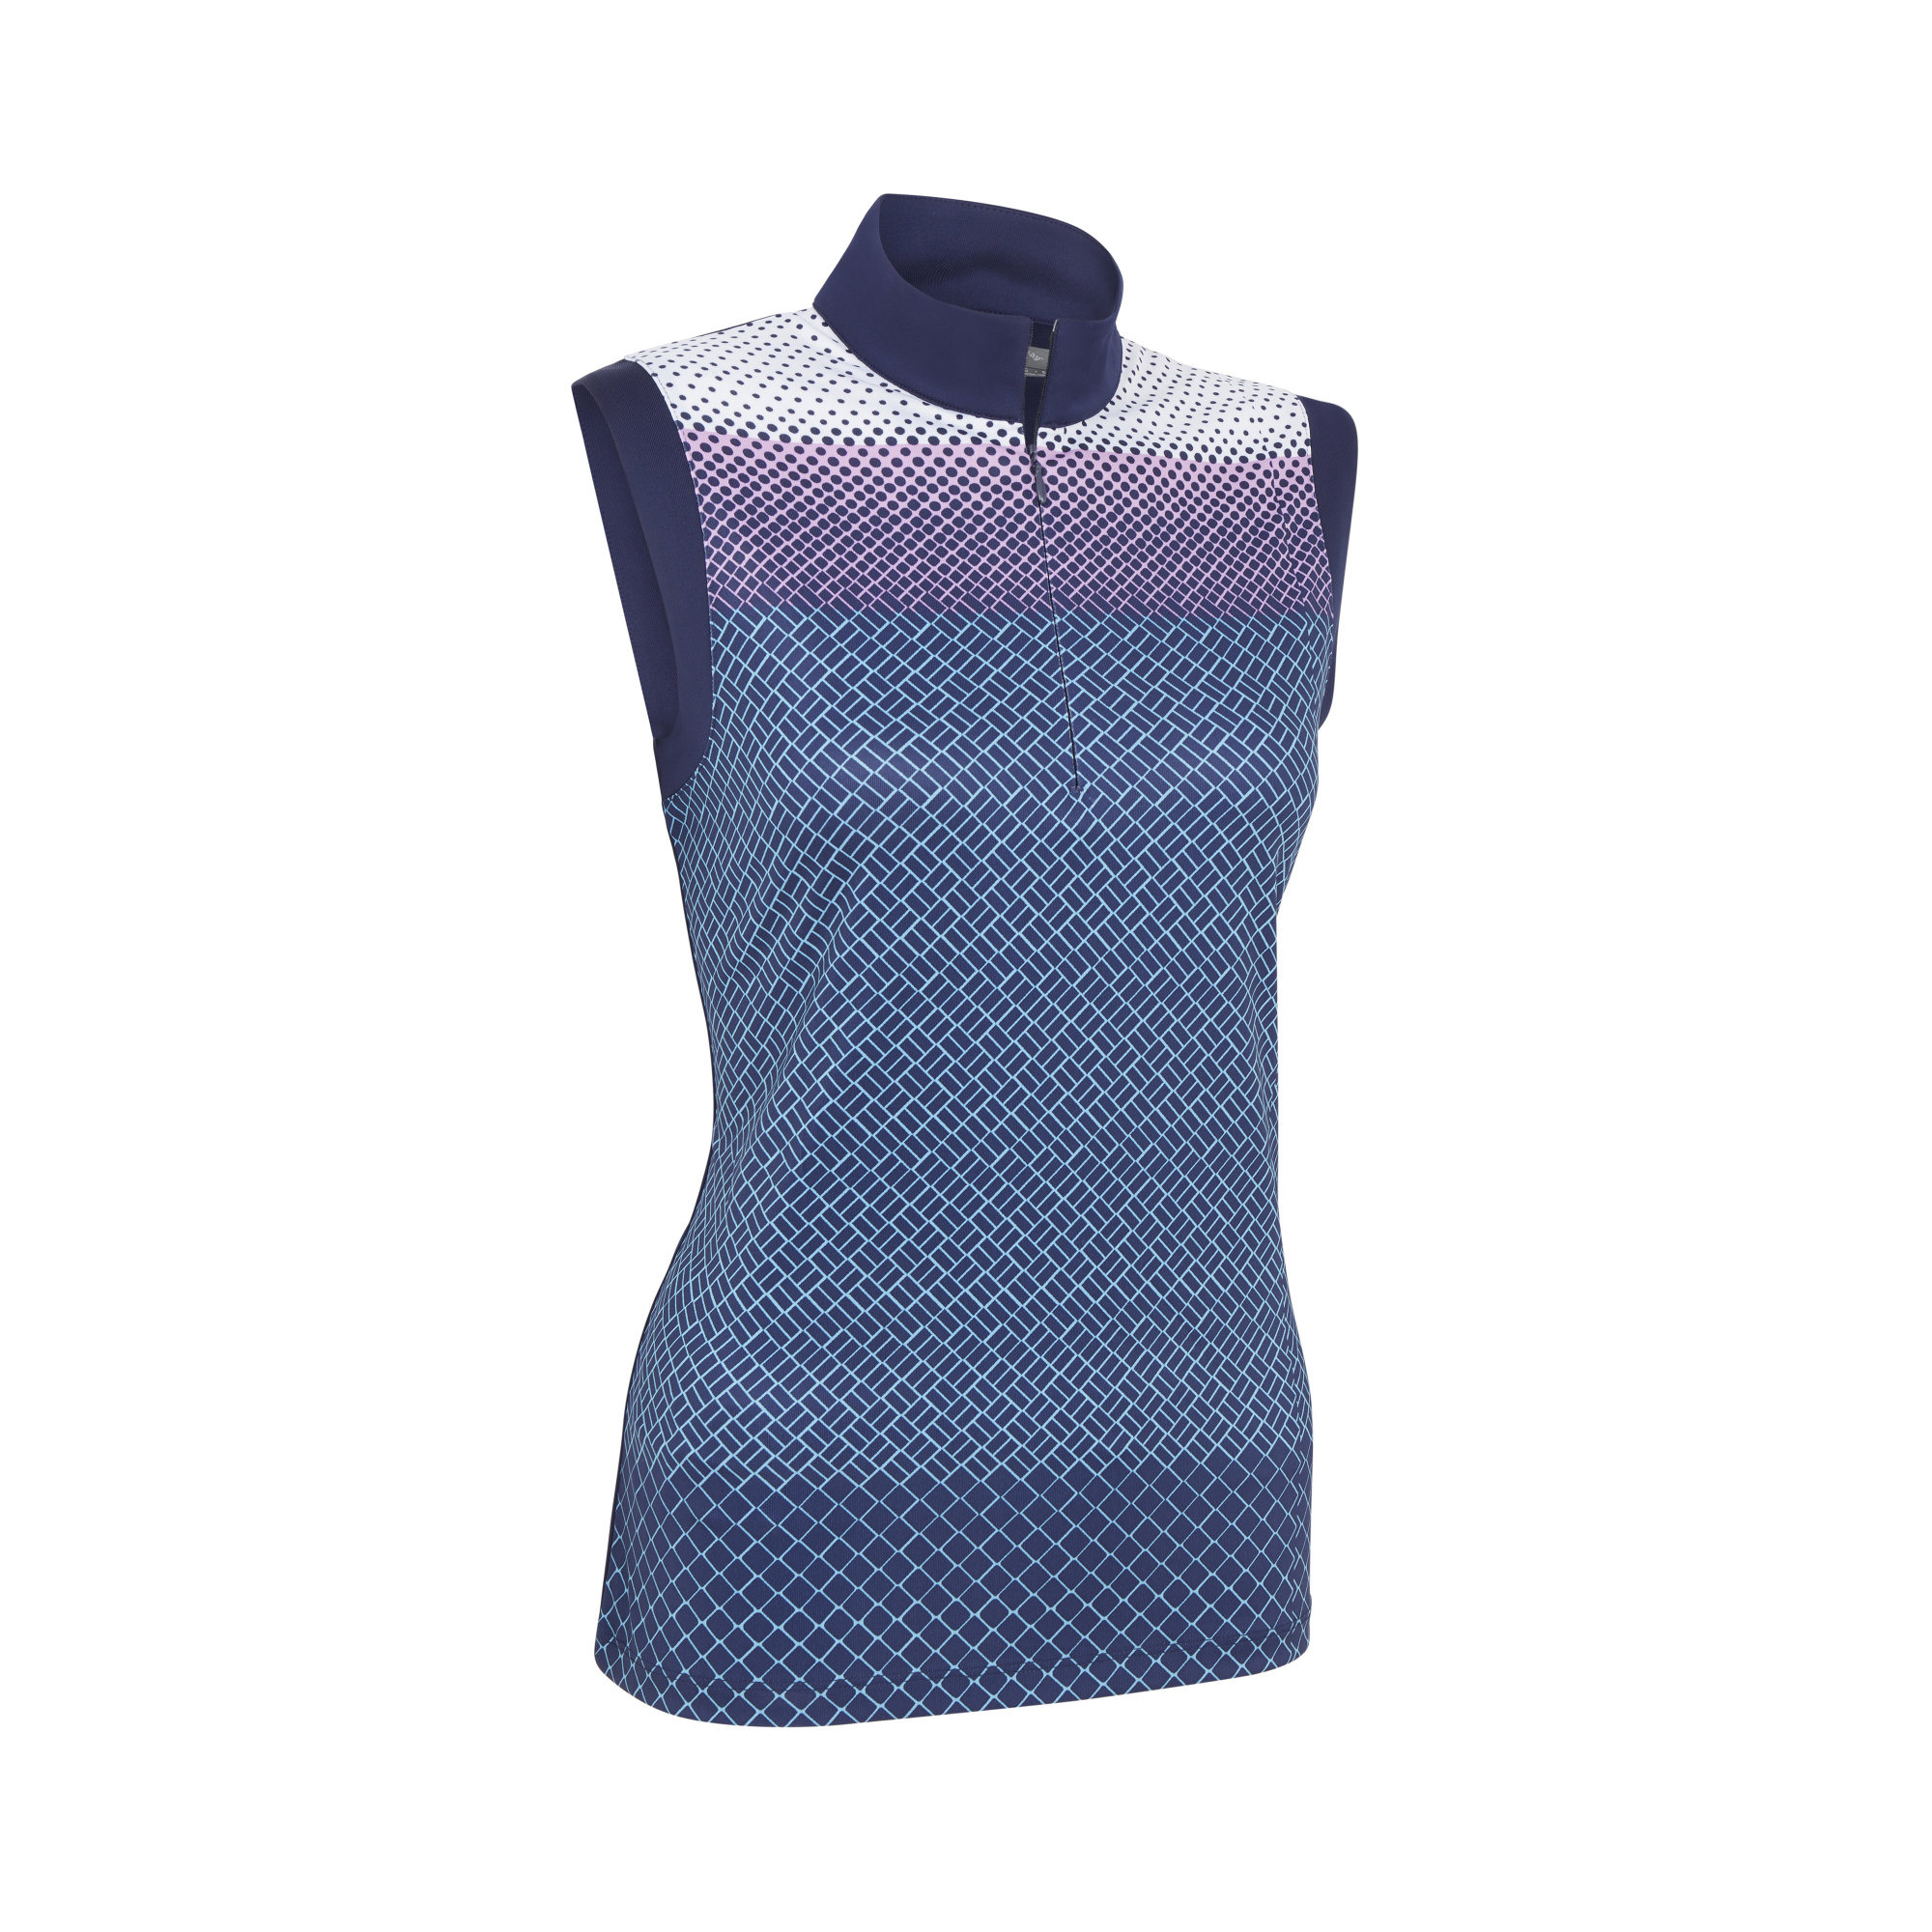 Callaway Zip Mock Gradient Printed dámské golfové triko bez rukávů, tmavě modré, vel. L